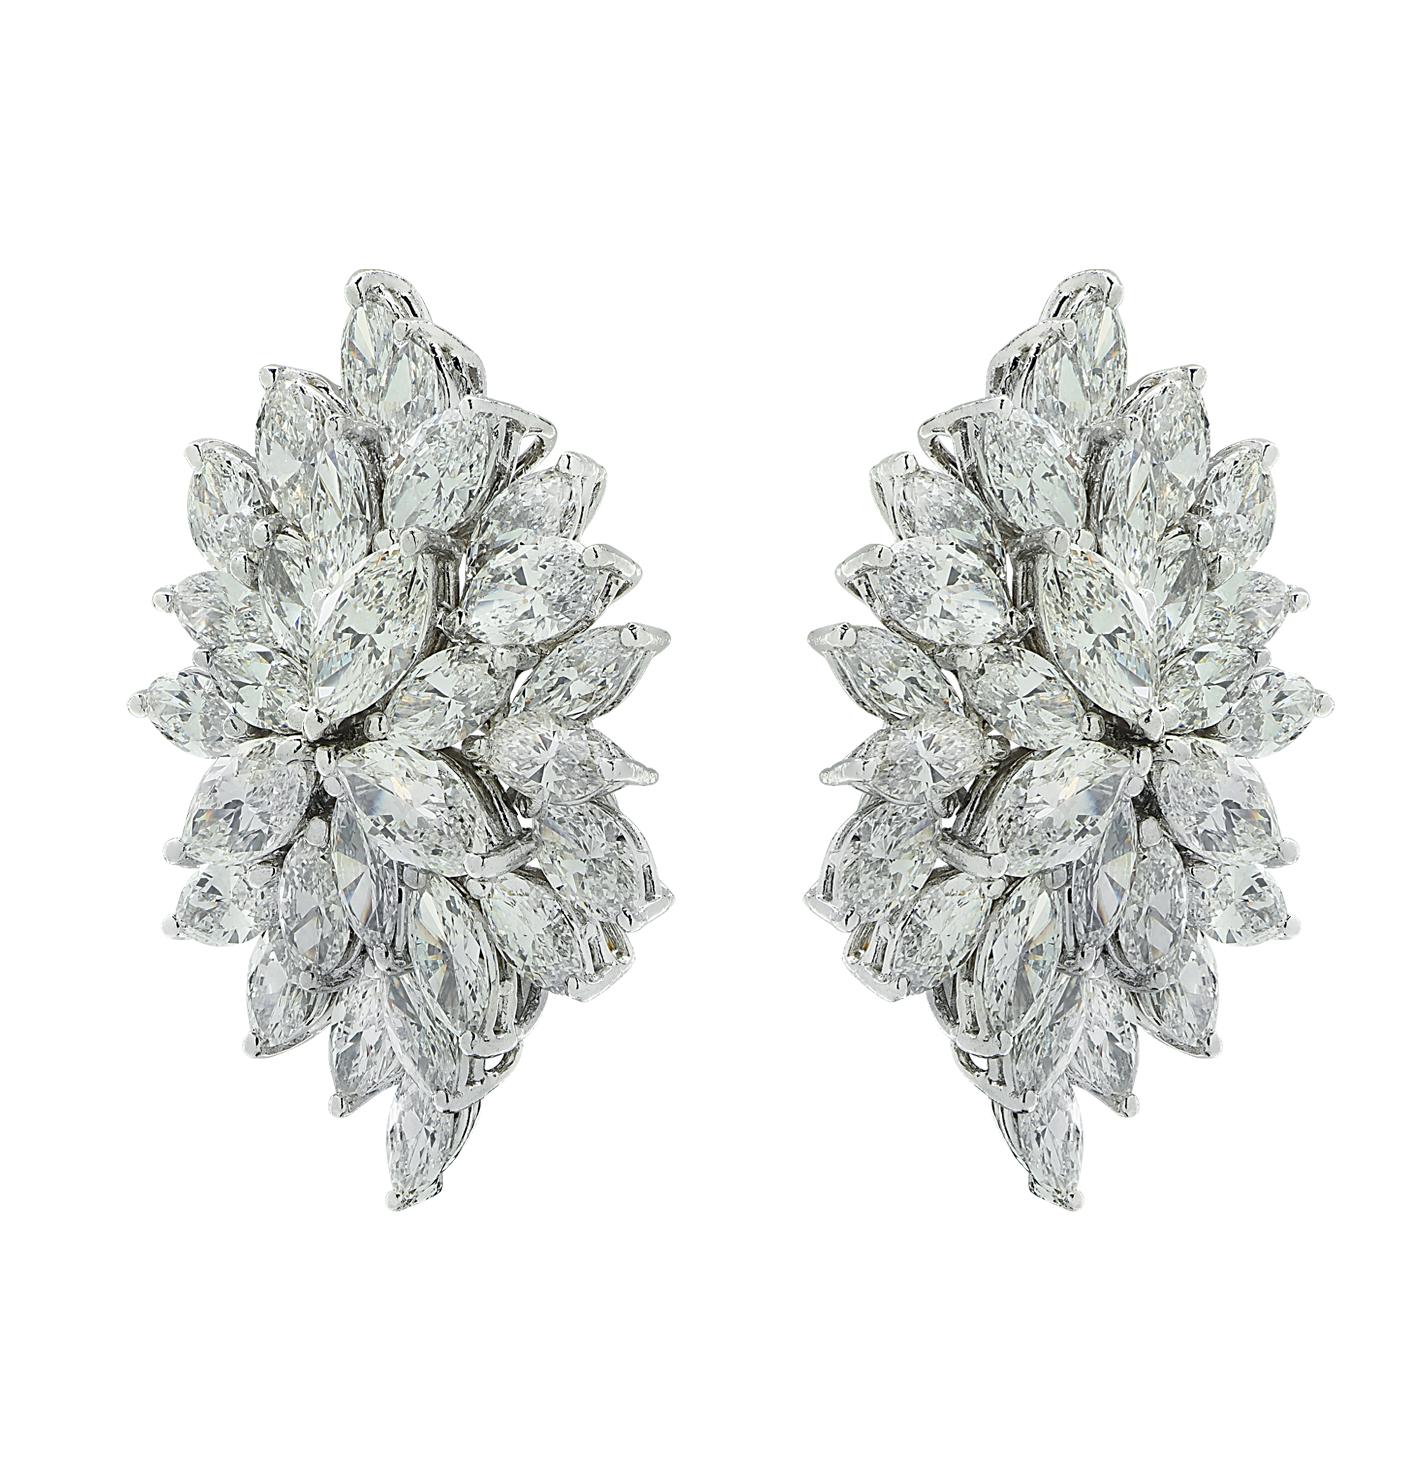 Marquise Cut Vivid Diamonds 12.70 Carat Diamond Cluster Earrings